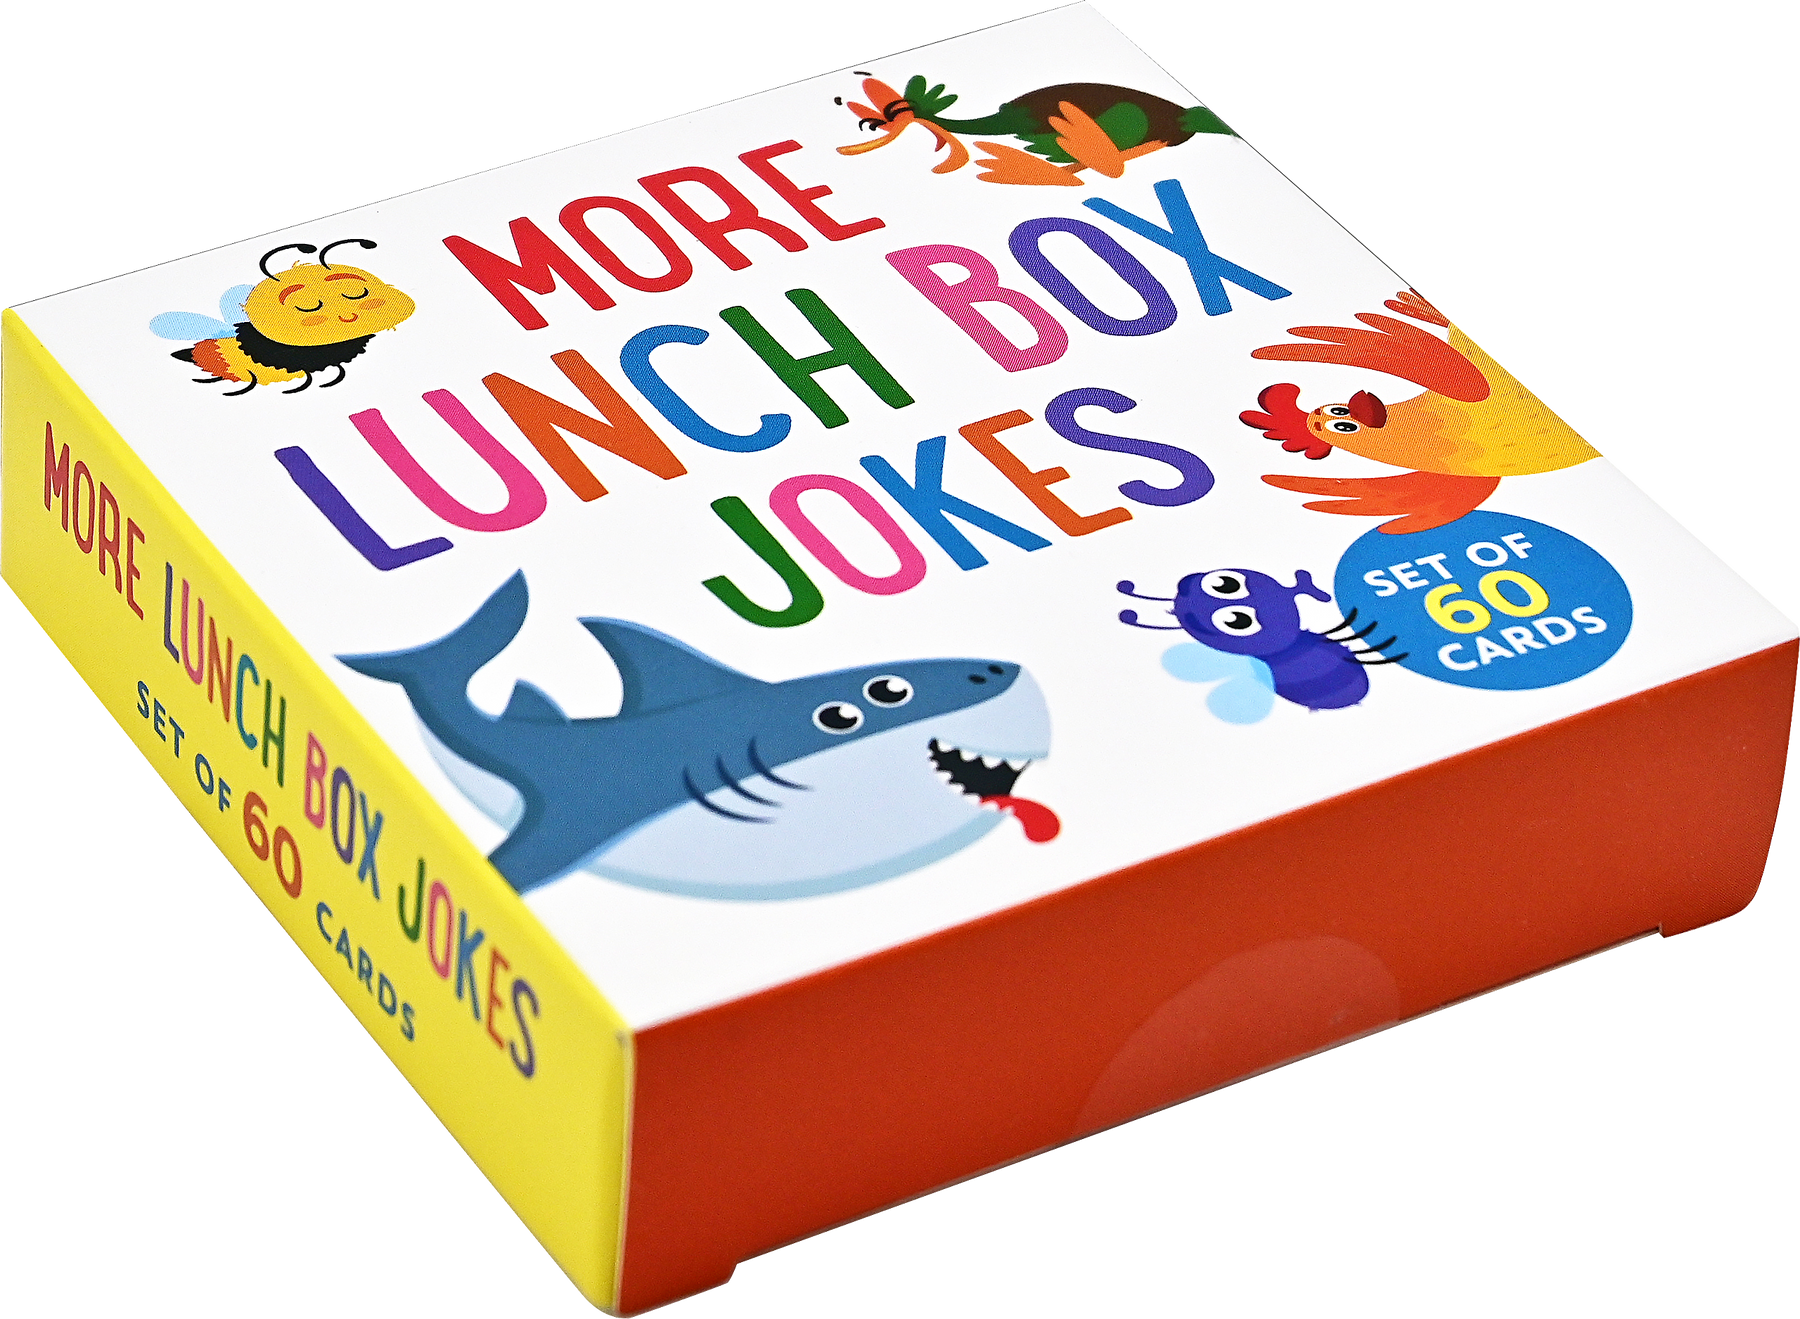 More Lunch Box Jokes